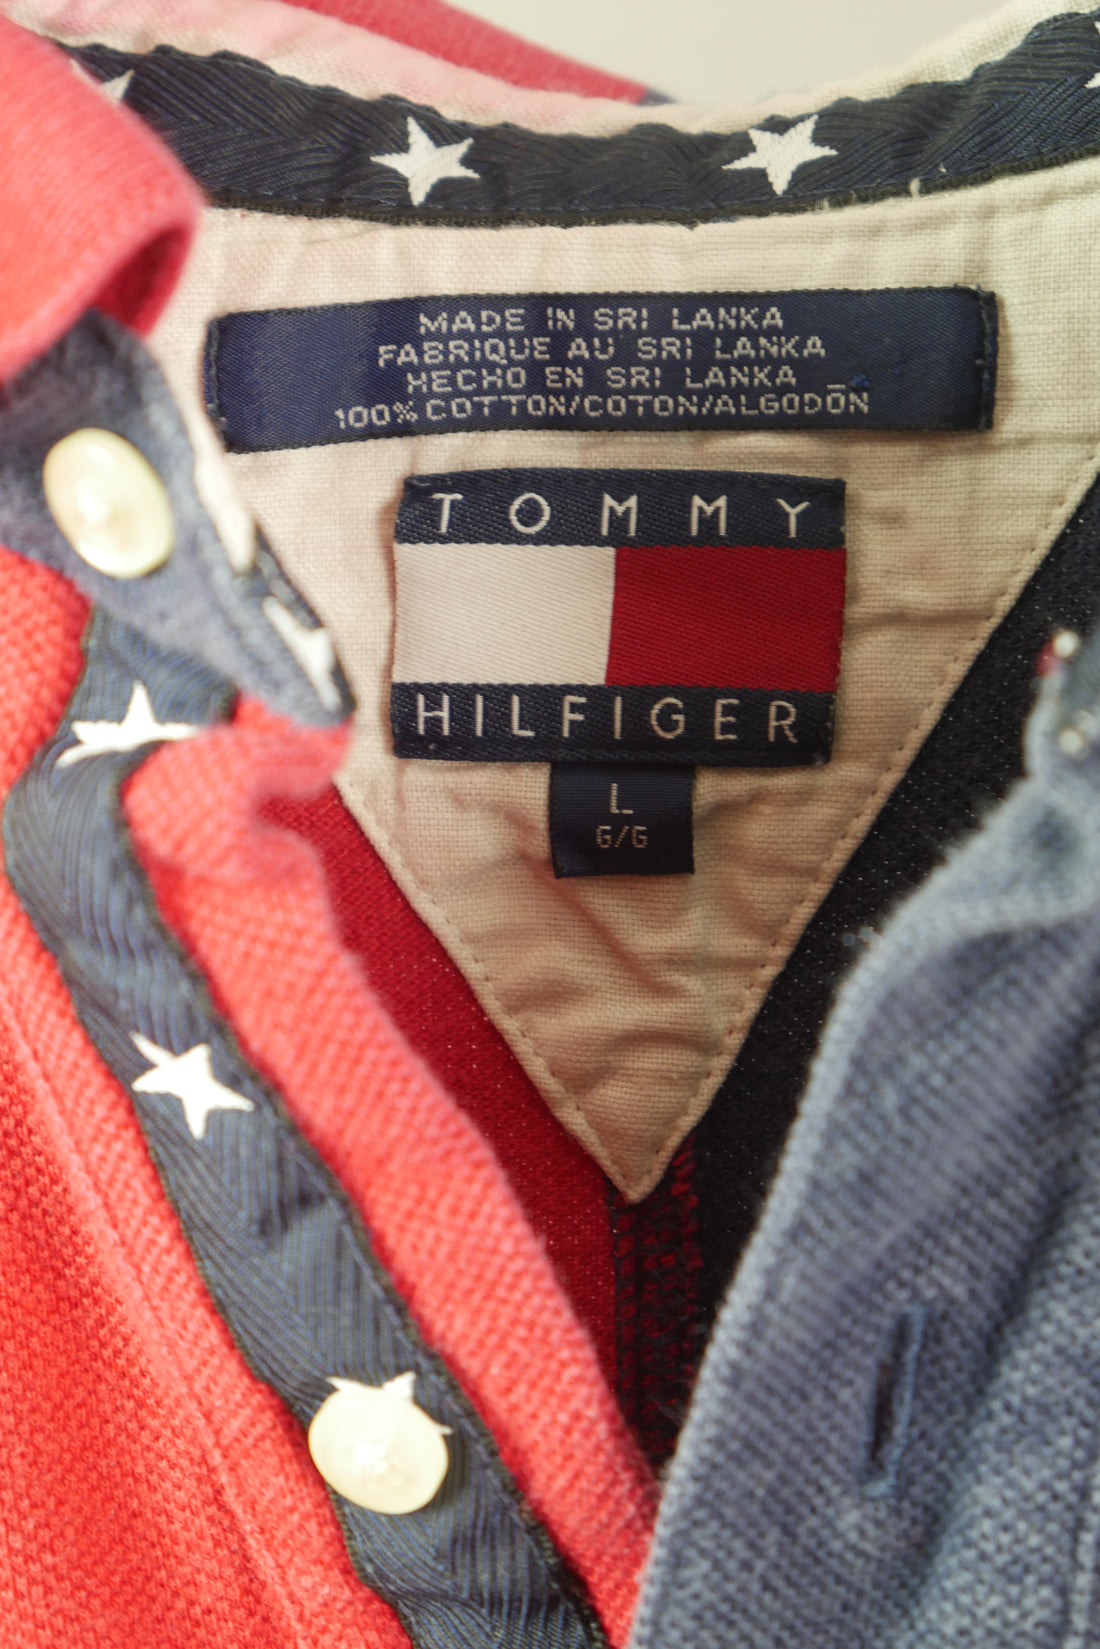 The Tommy Hilfiger Colourblock Polo Shirt (L)